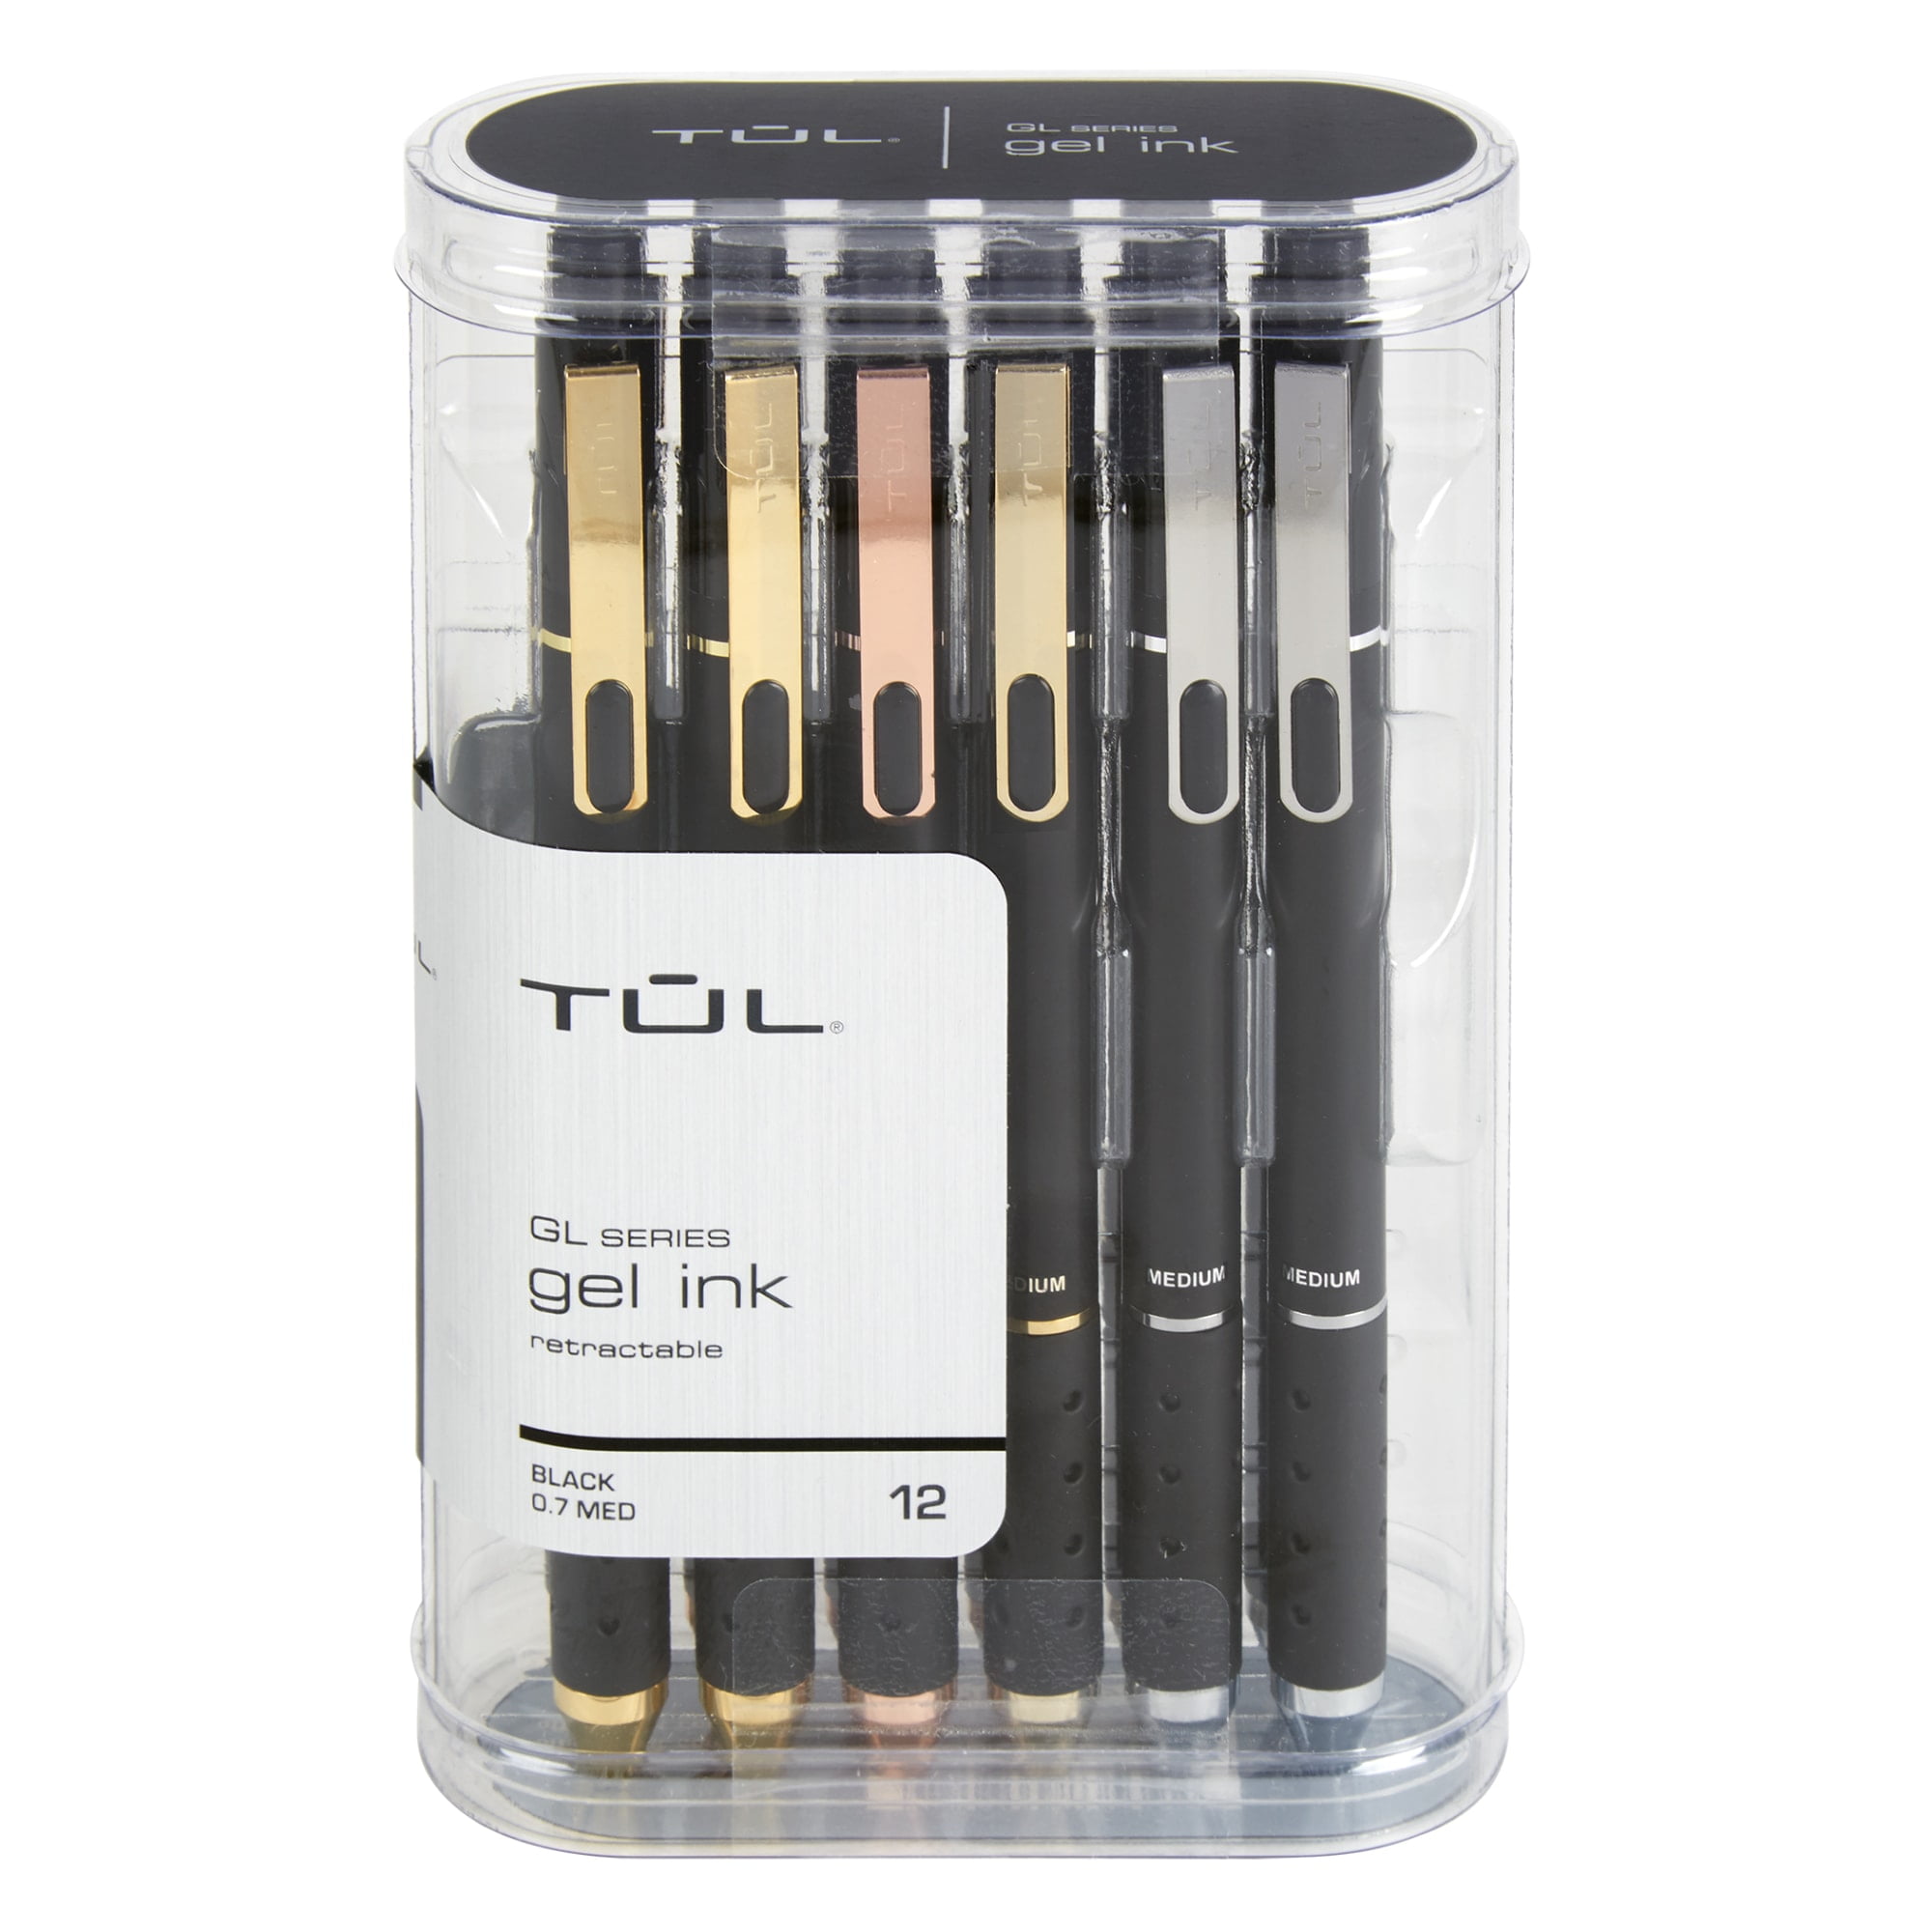 TUL Gel Pens, Retractable, Needle Point, 0.5 mm, Blue Barrel, Blue Ink, Pack of 4